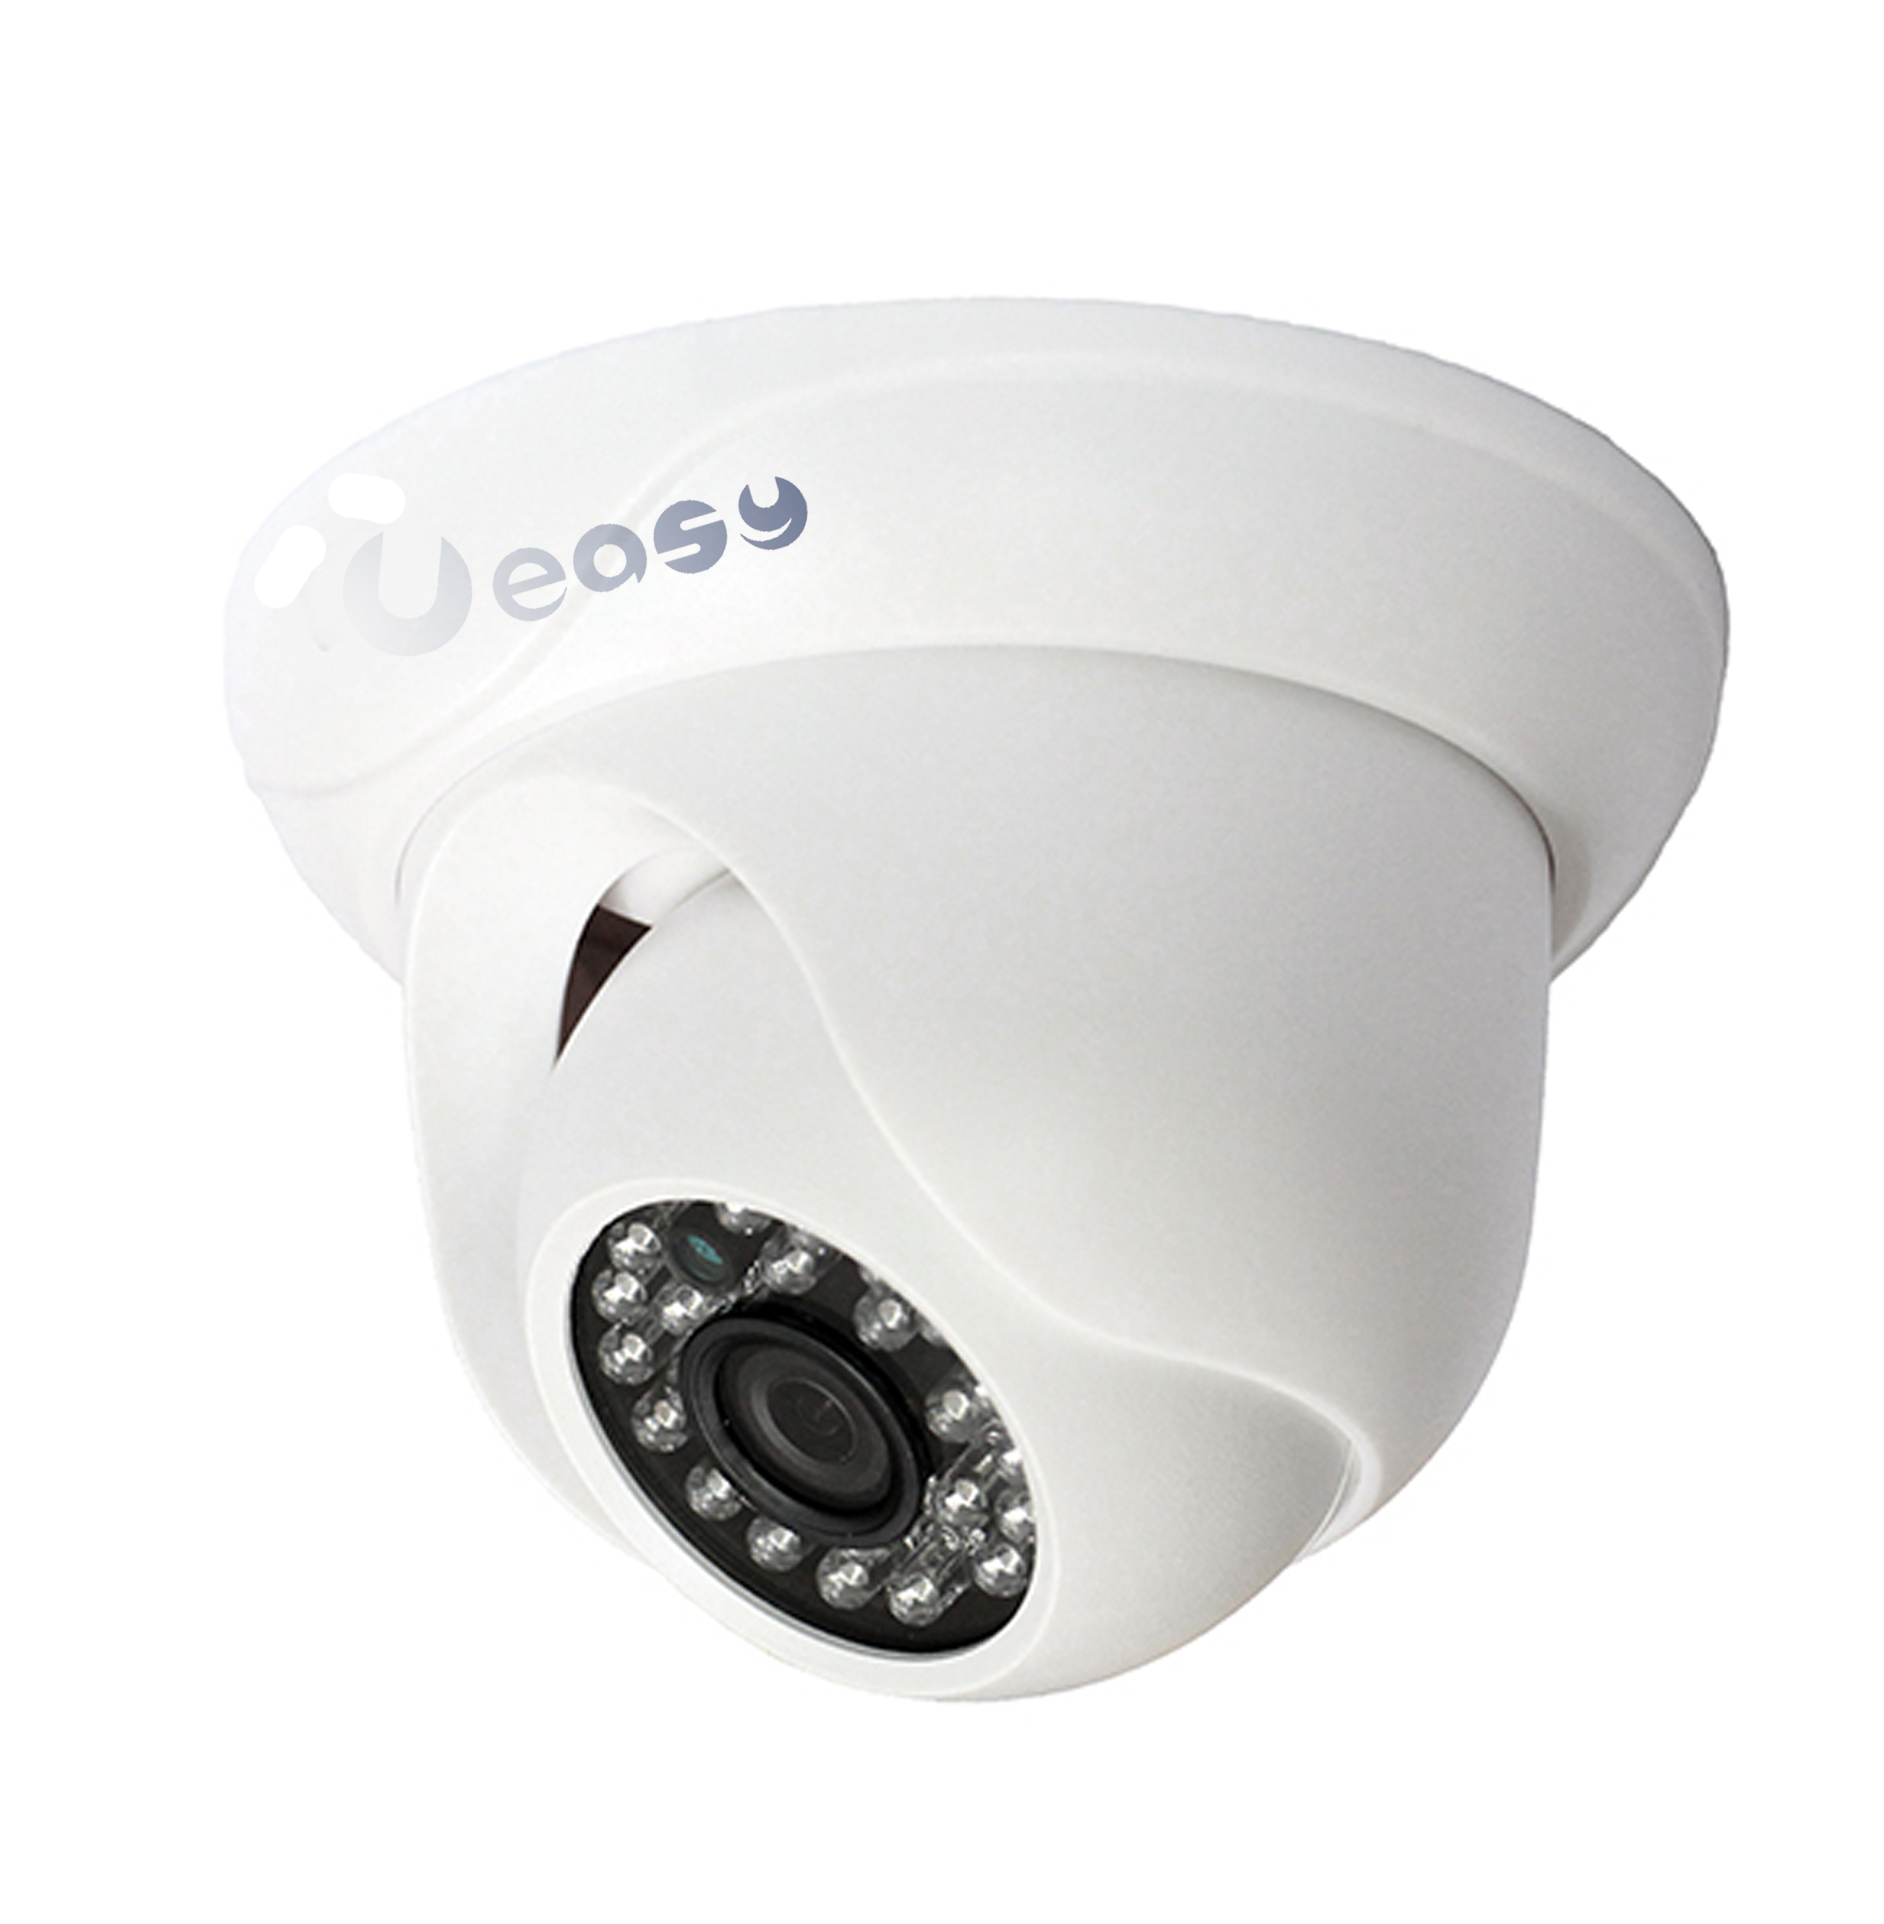 Ueasy 1.0 Megapixel Onvif HD 720P Outdoor Network Camera Waterproof Mini 15m IR Night Vision Dome IP Camera 